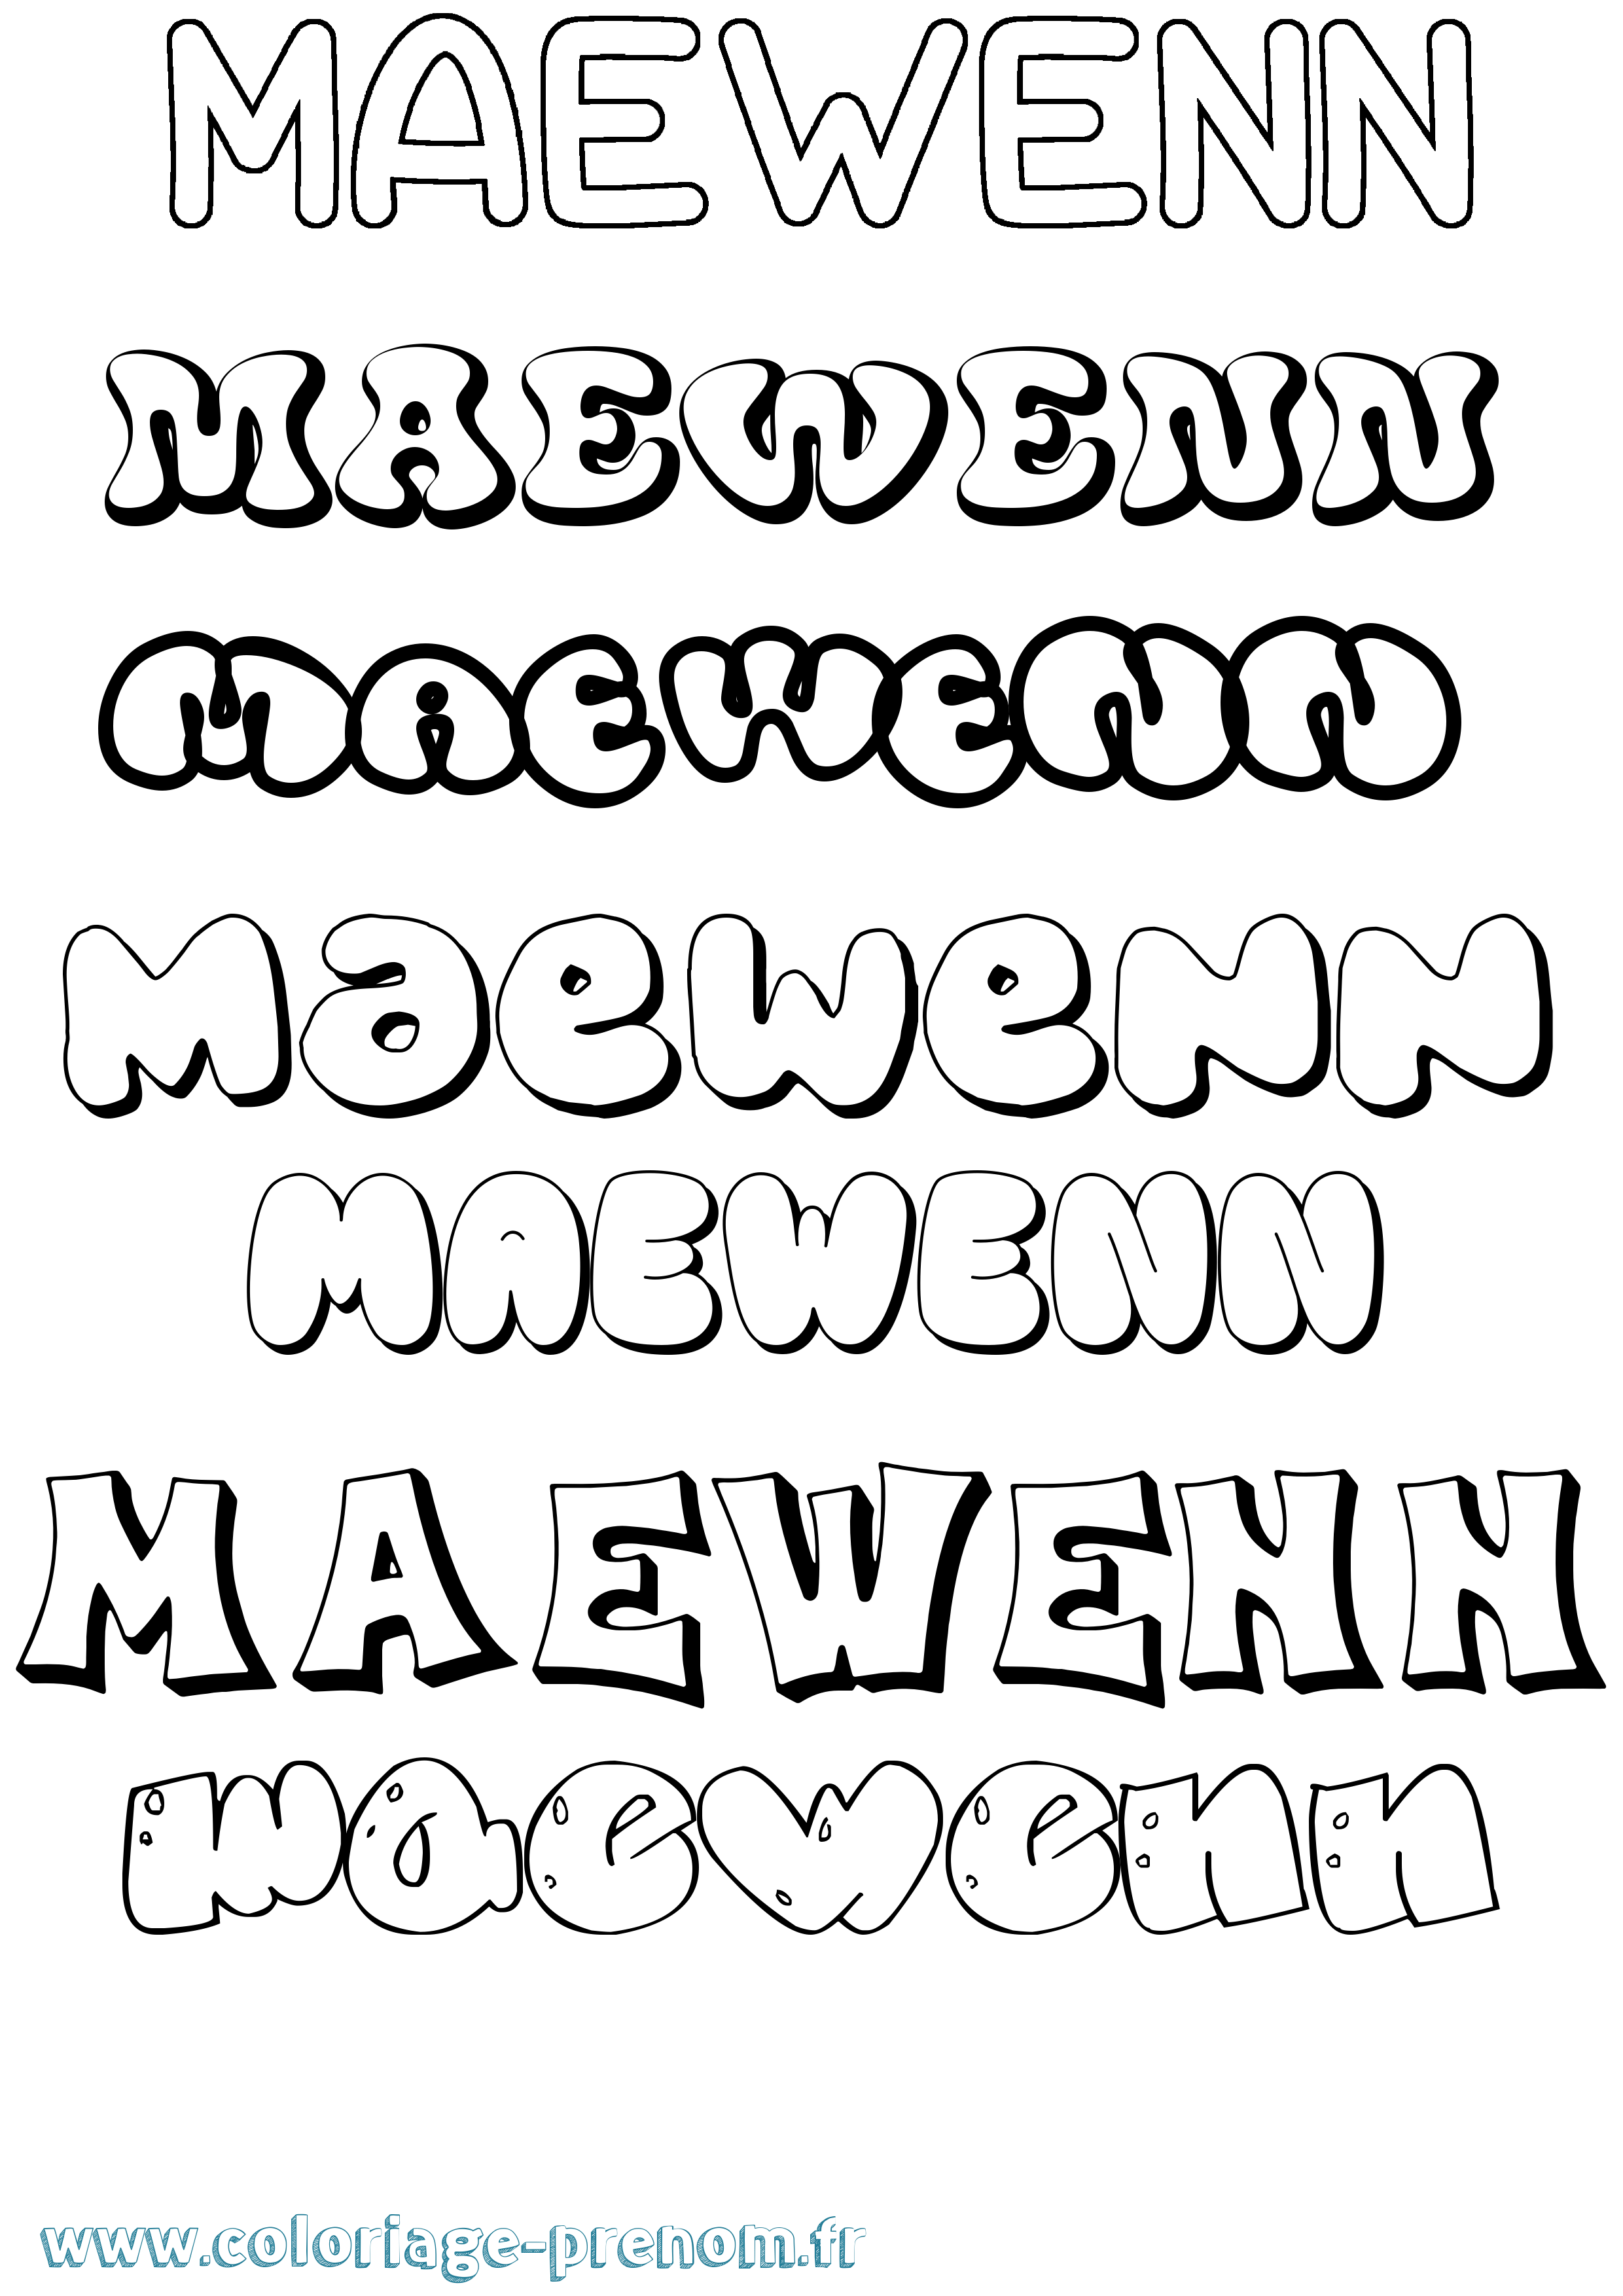 Coloriage prénom Maewenn Bubble